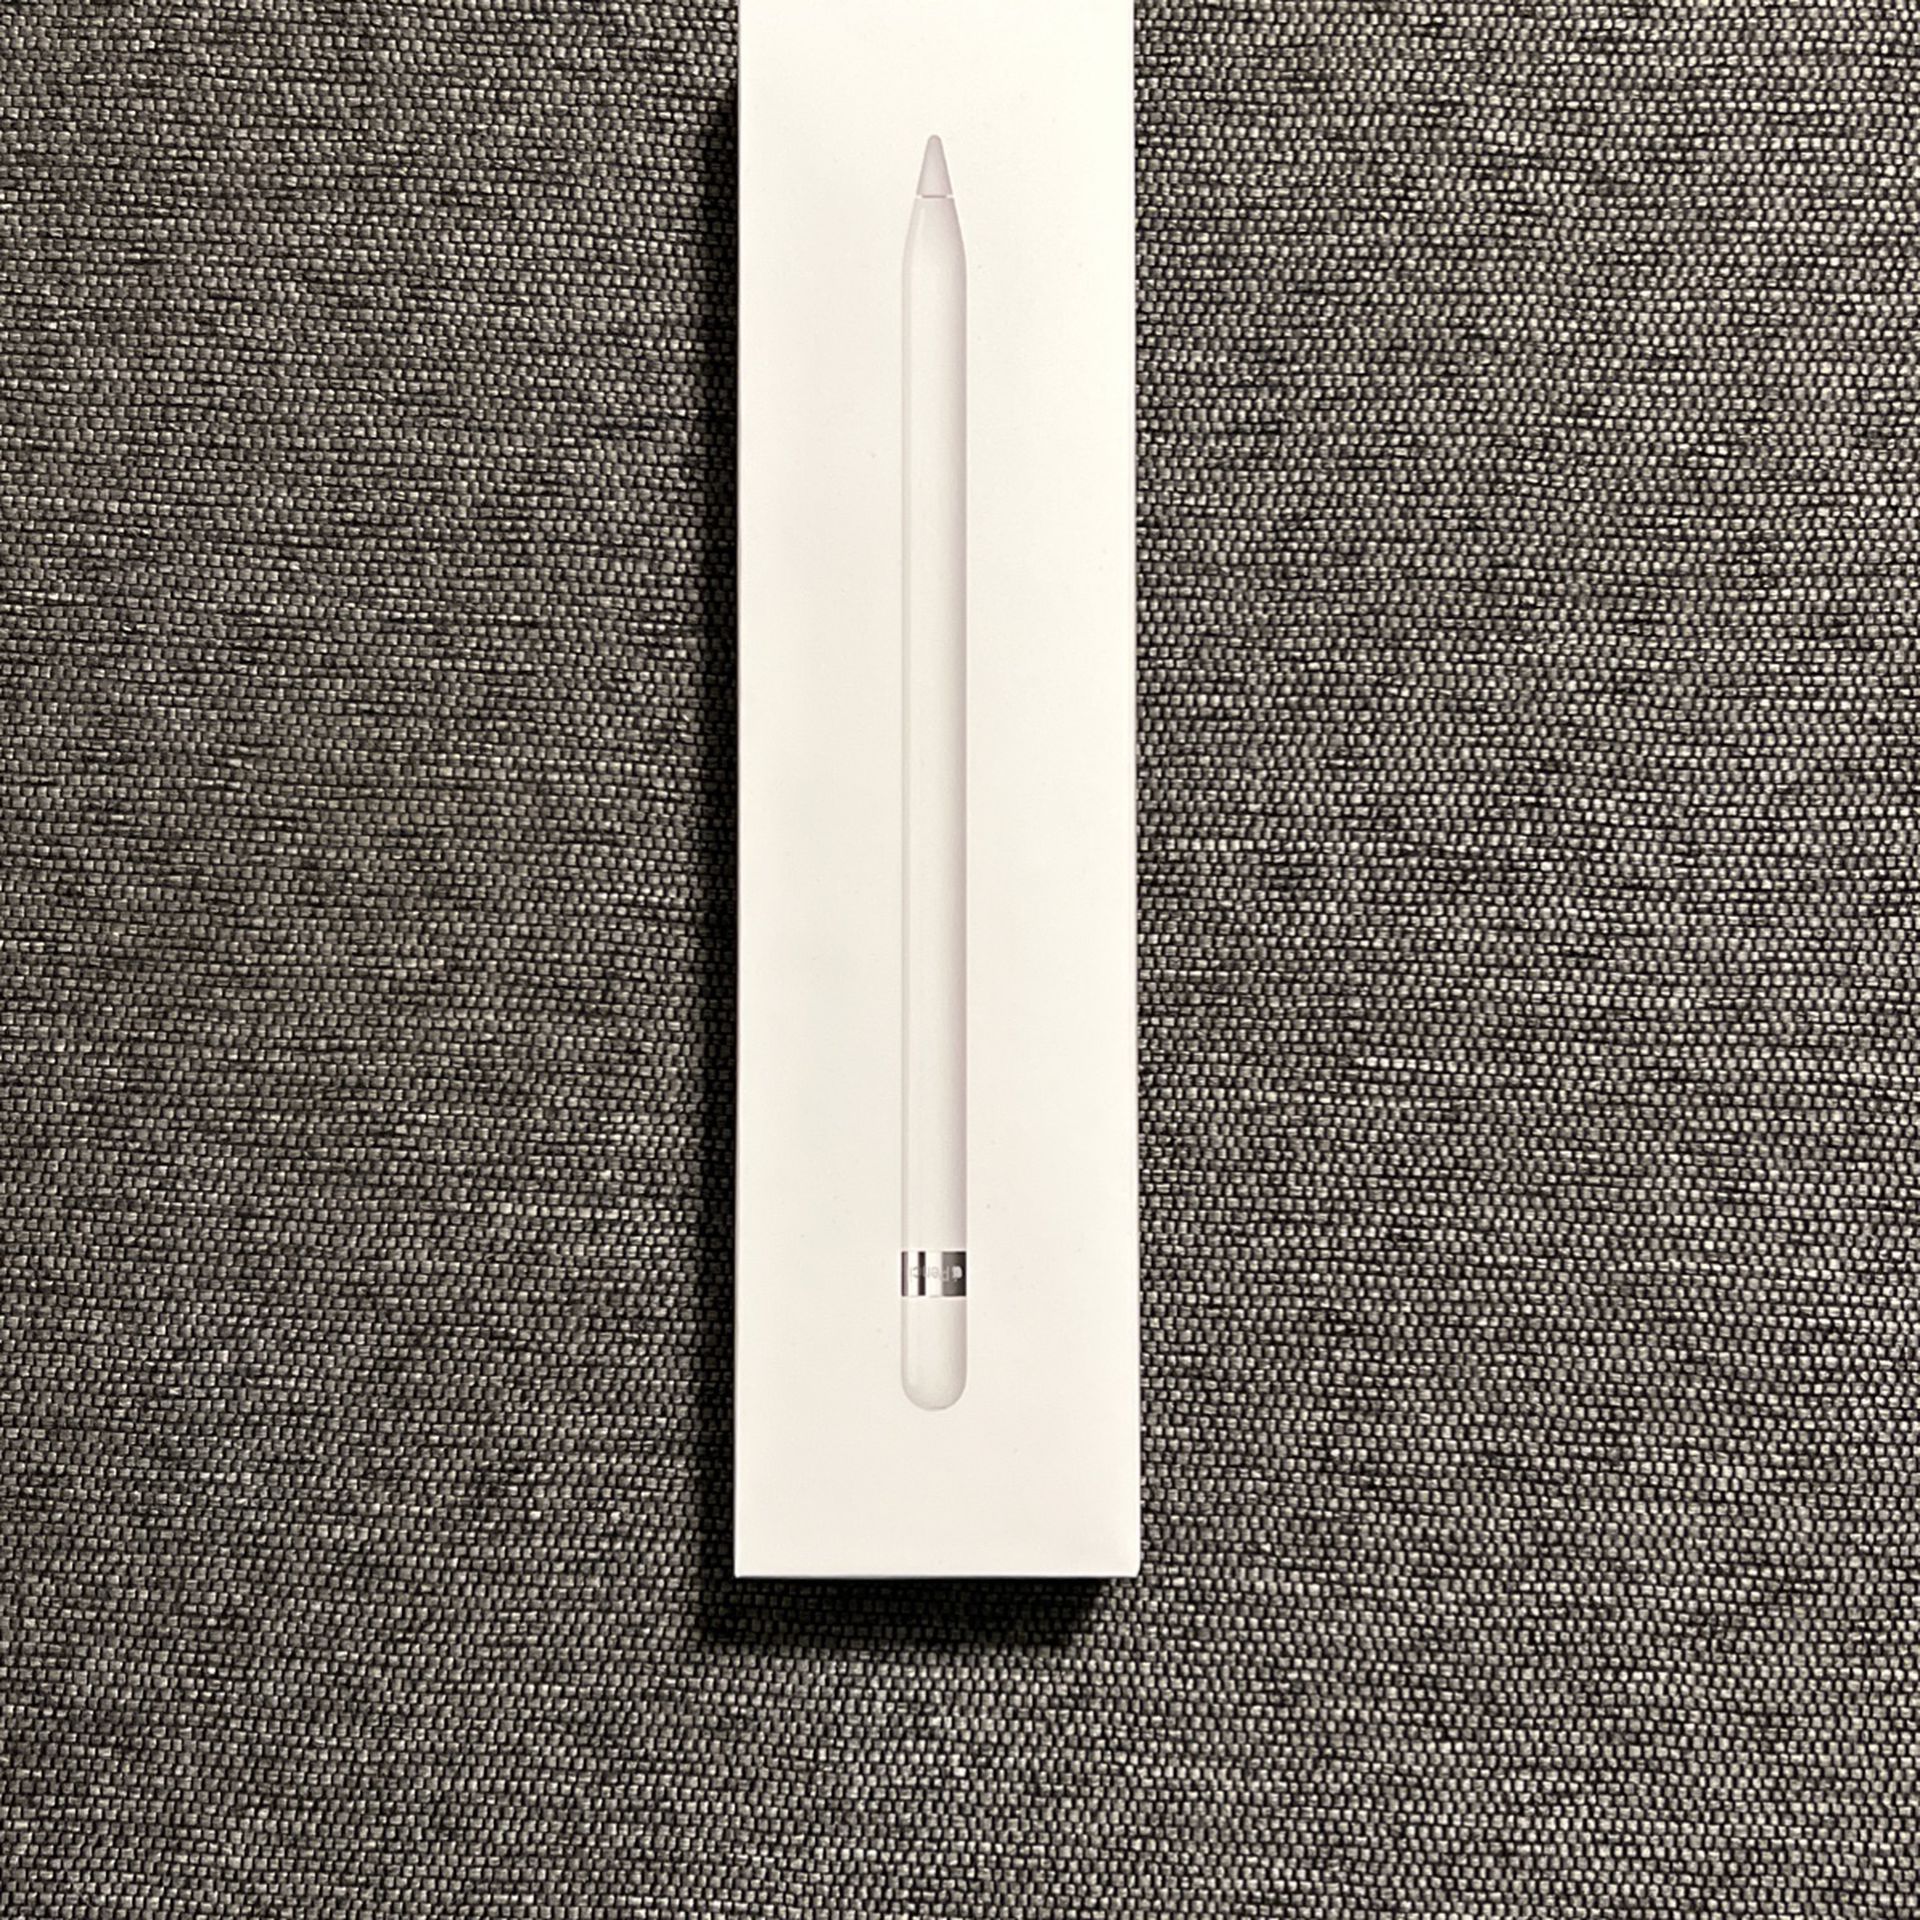 Apple Pencil (Gen 1) 